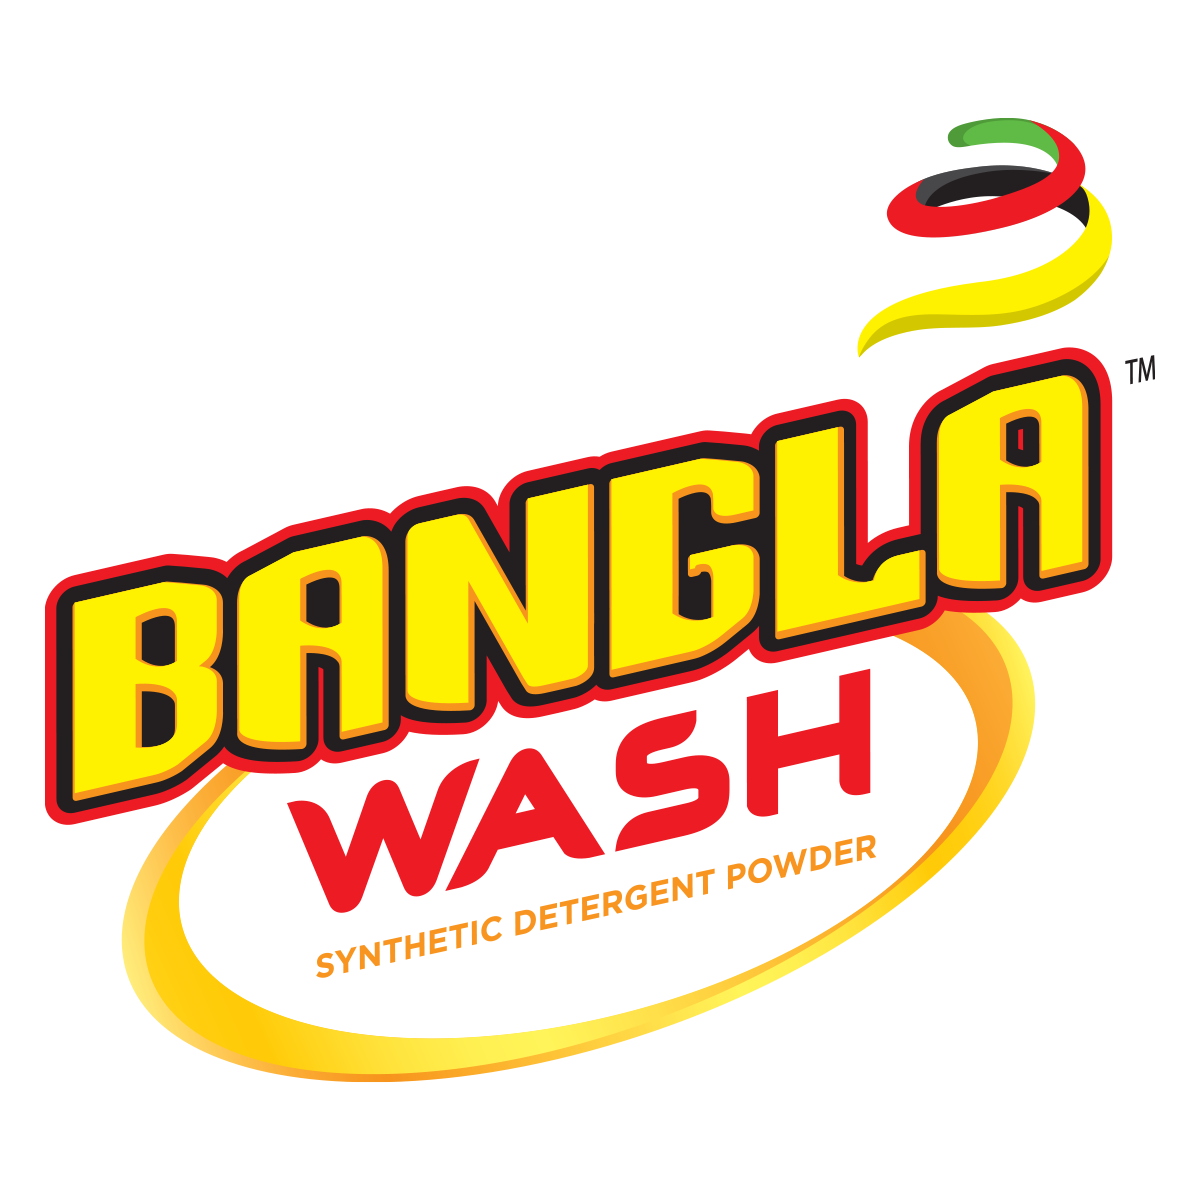 BANGLA-WASH-Detergent-Powder-Bangla-Logo